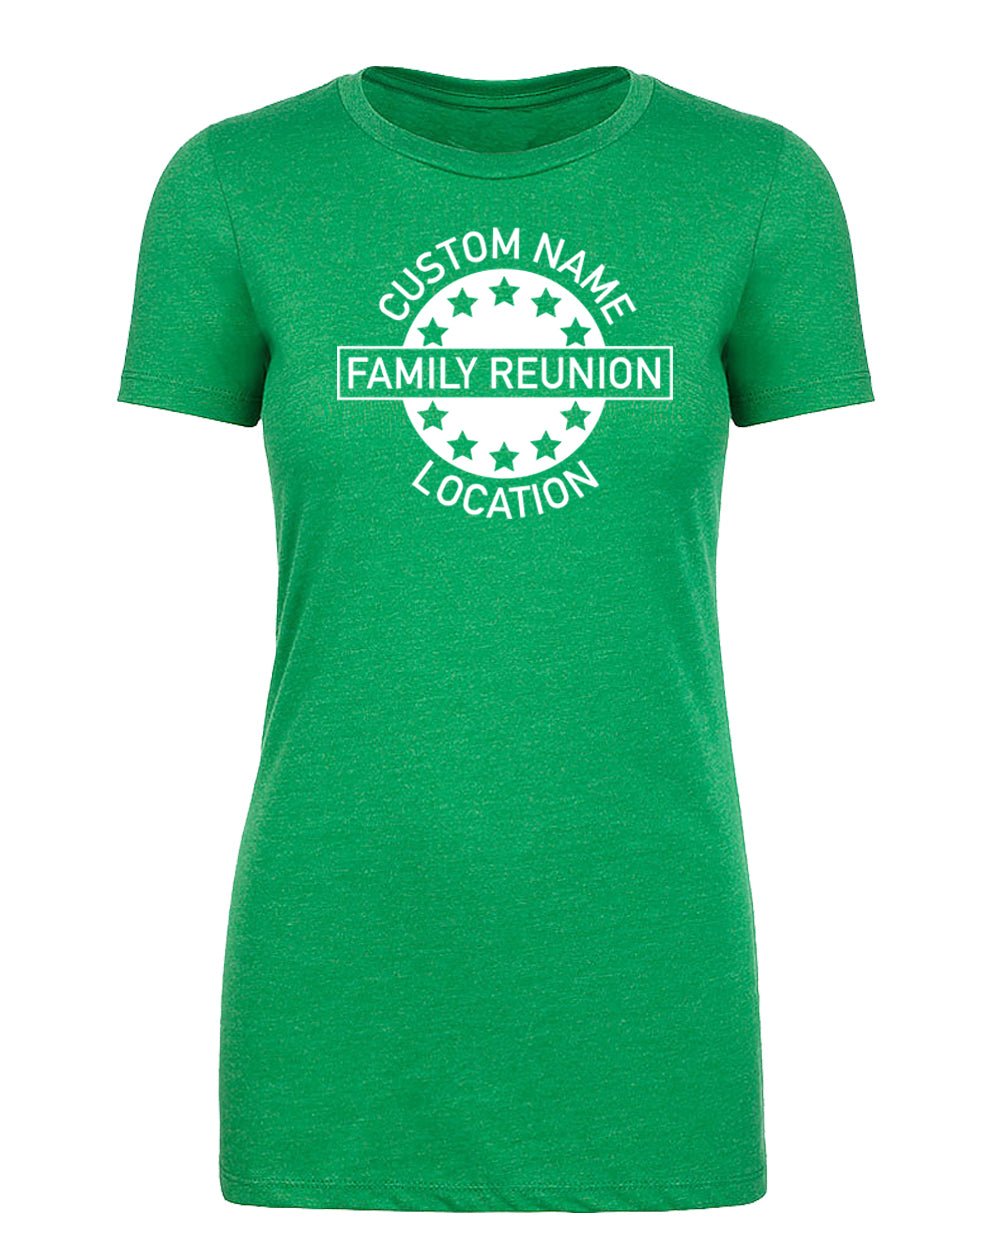 Stars Emblem Custom Name & Location Family Reunion Womens T Shirts - Mato & Hash